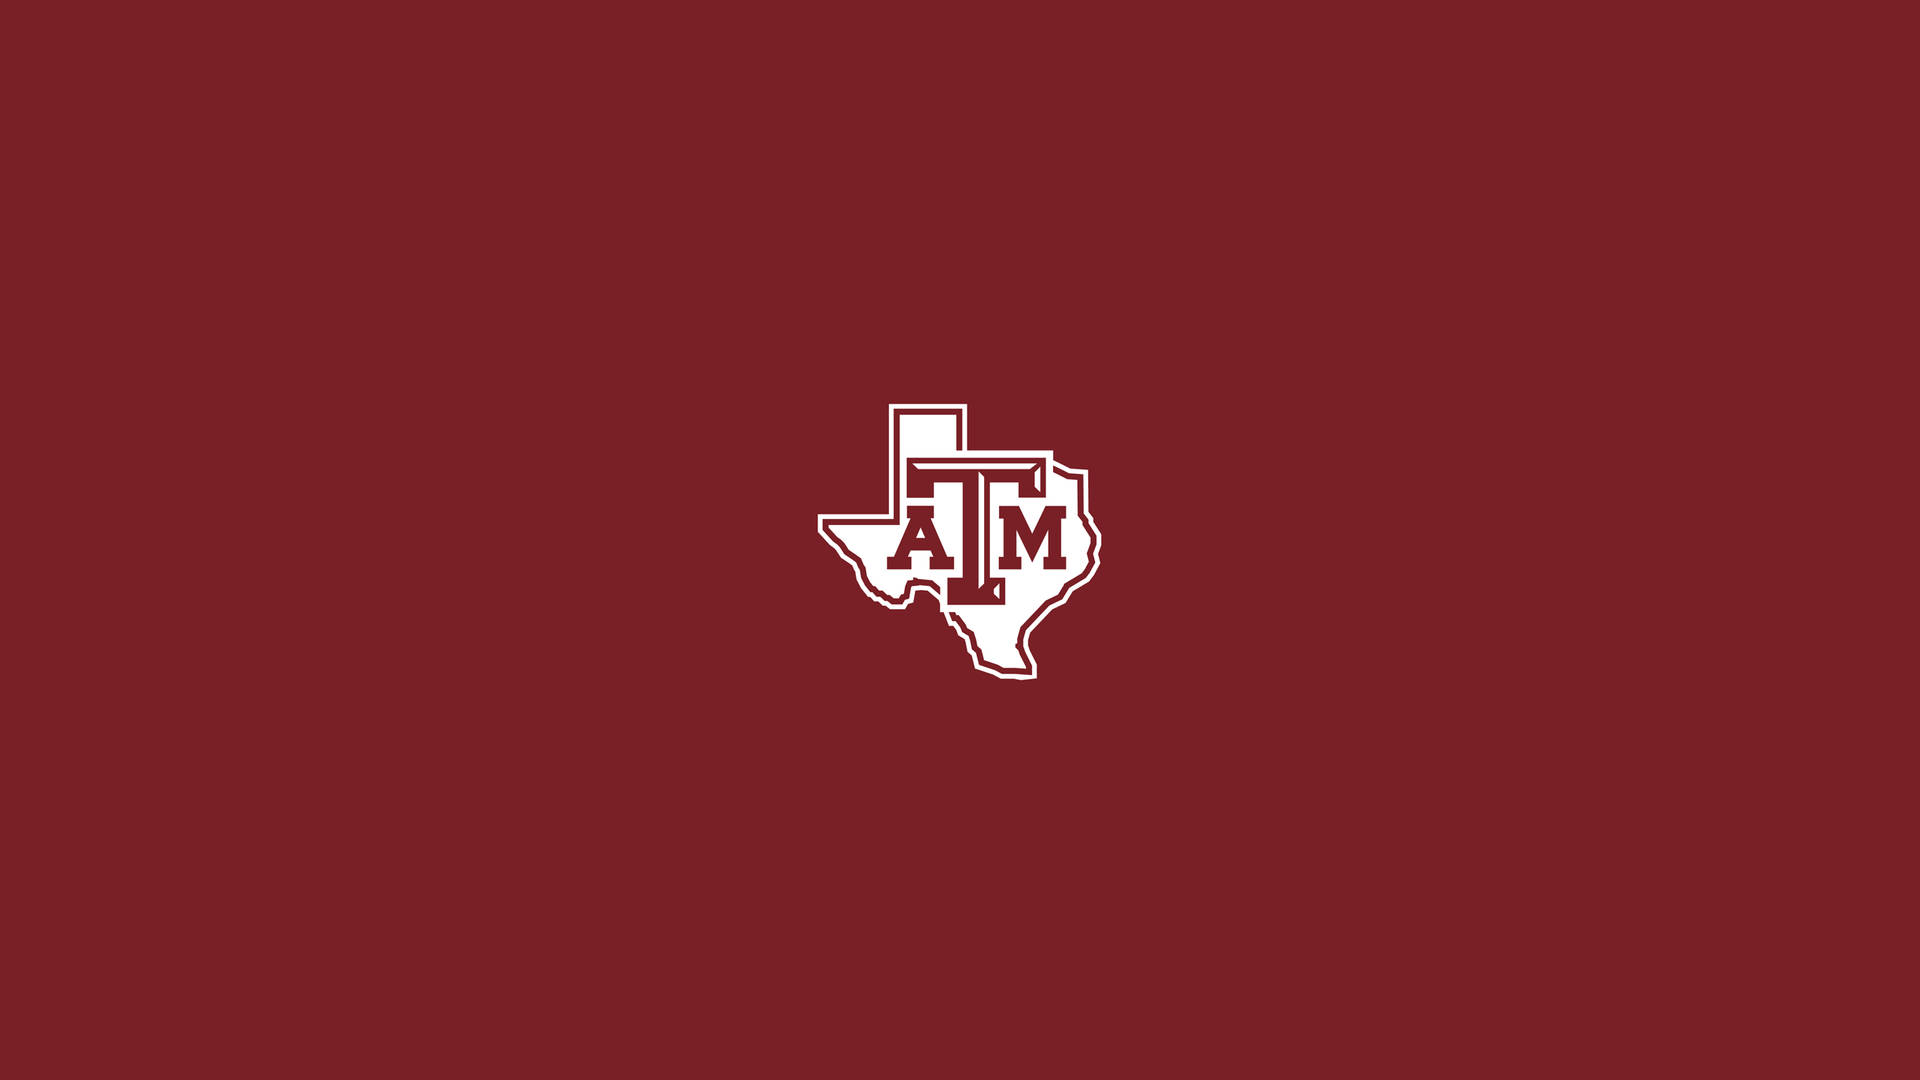 Texas Am University Simple Maroon Wallpaper